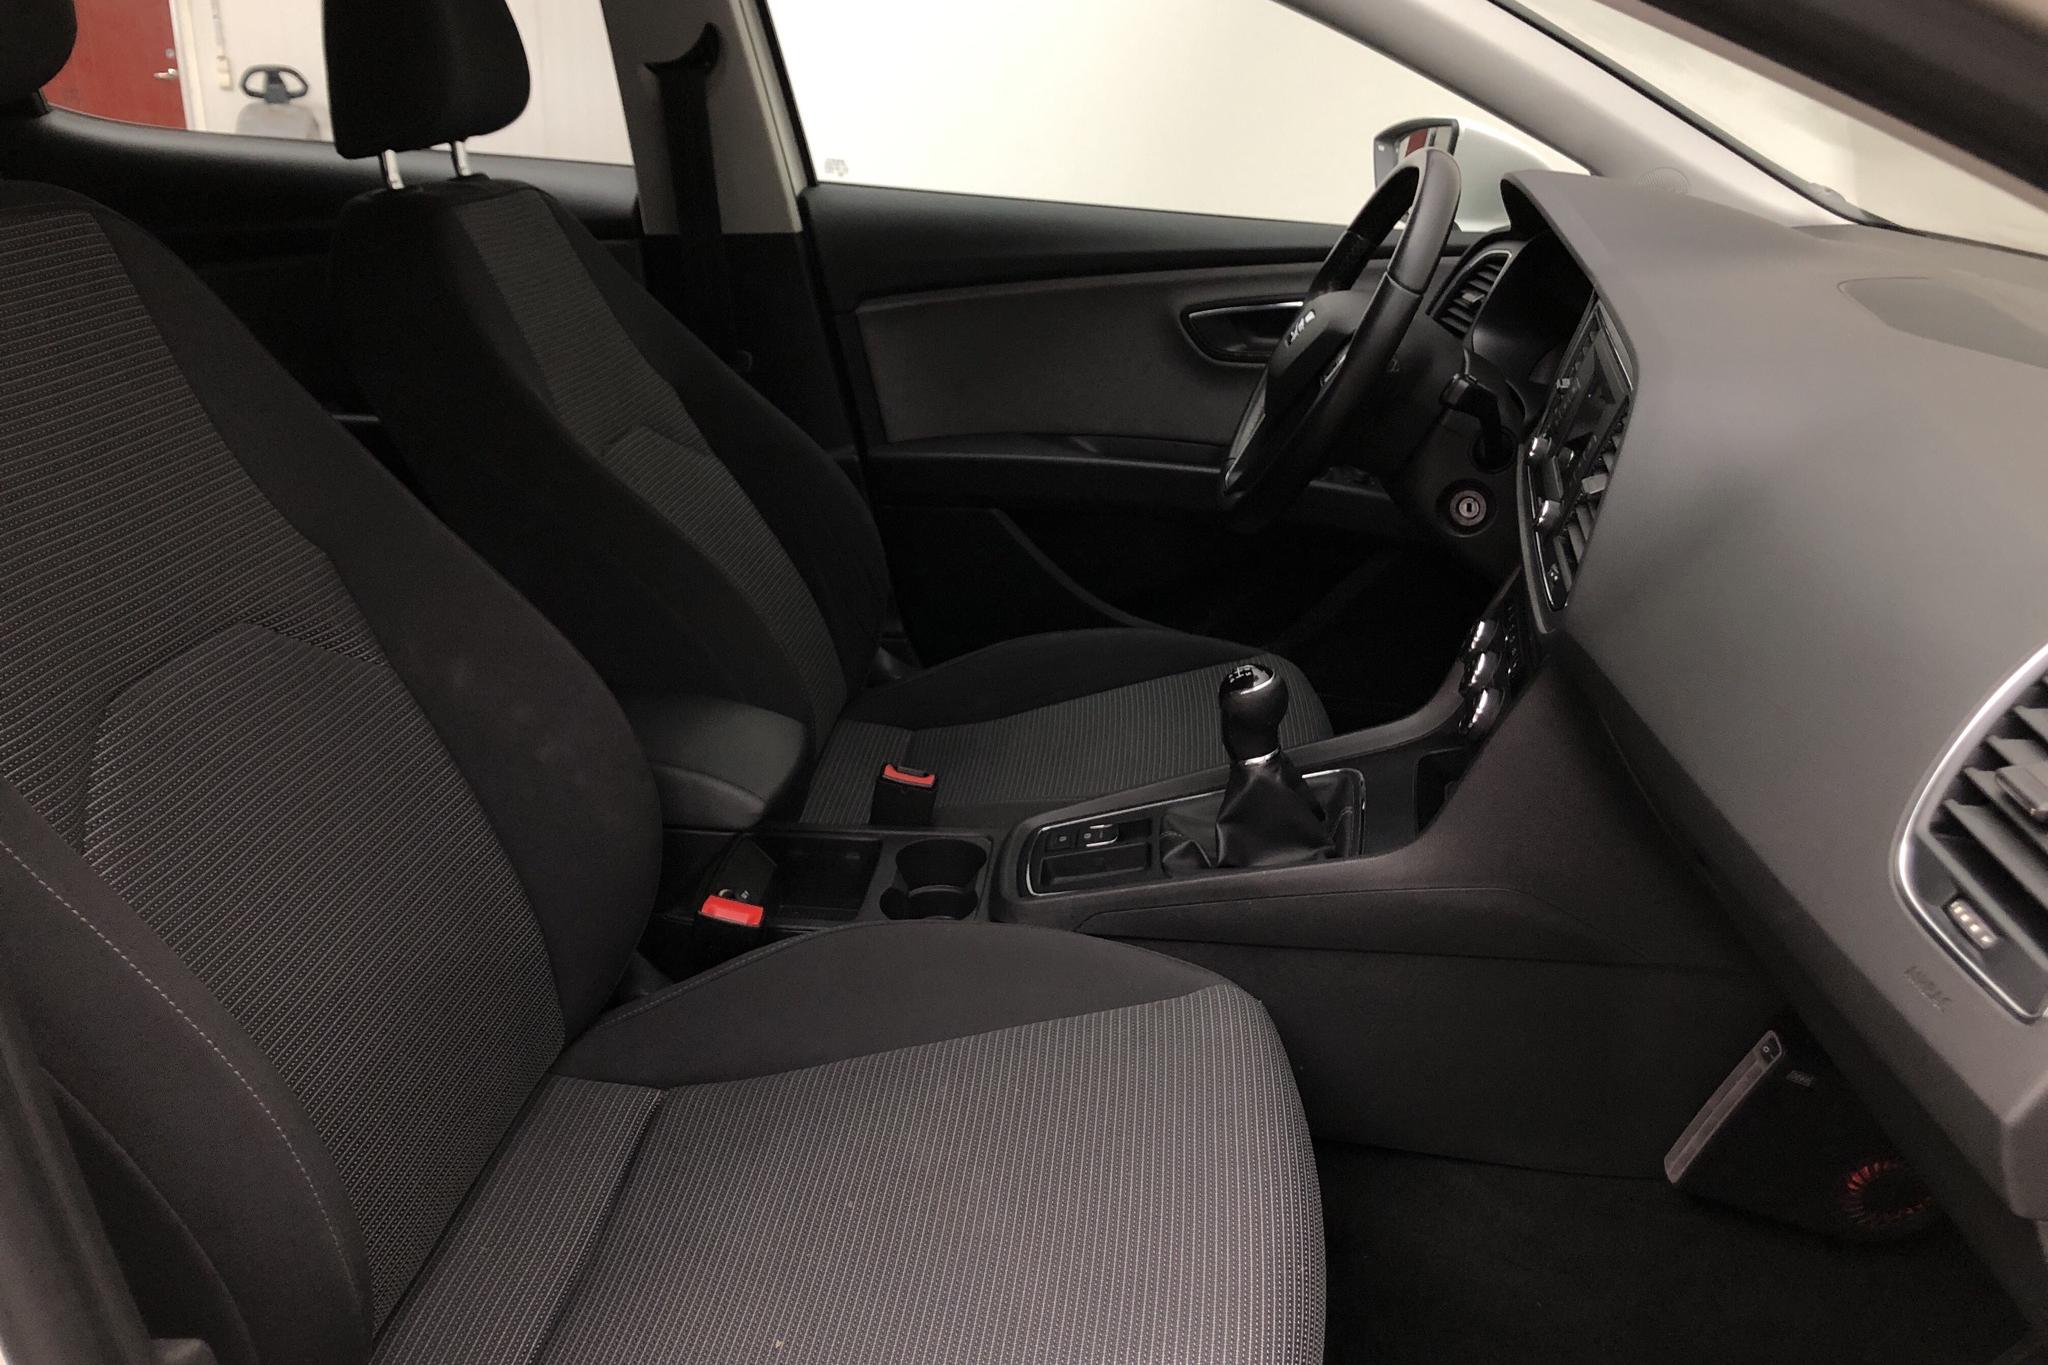 Seat Leon 1.4 TGI 5dr (110hk) - 110 840 km - Manual - white - 2018